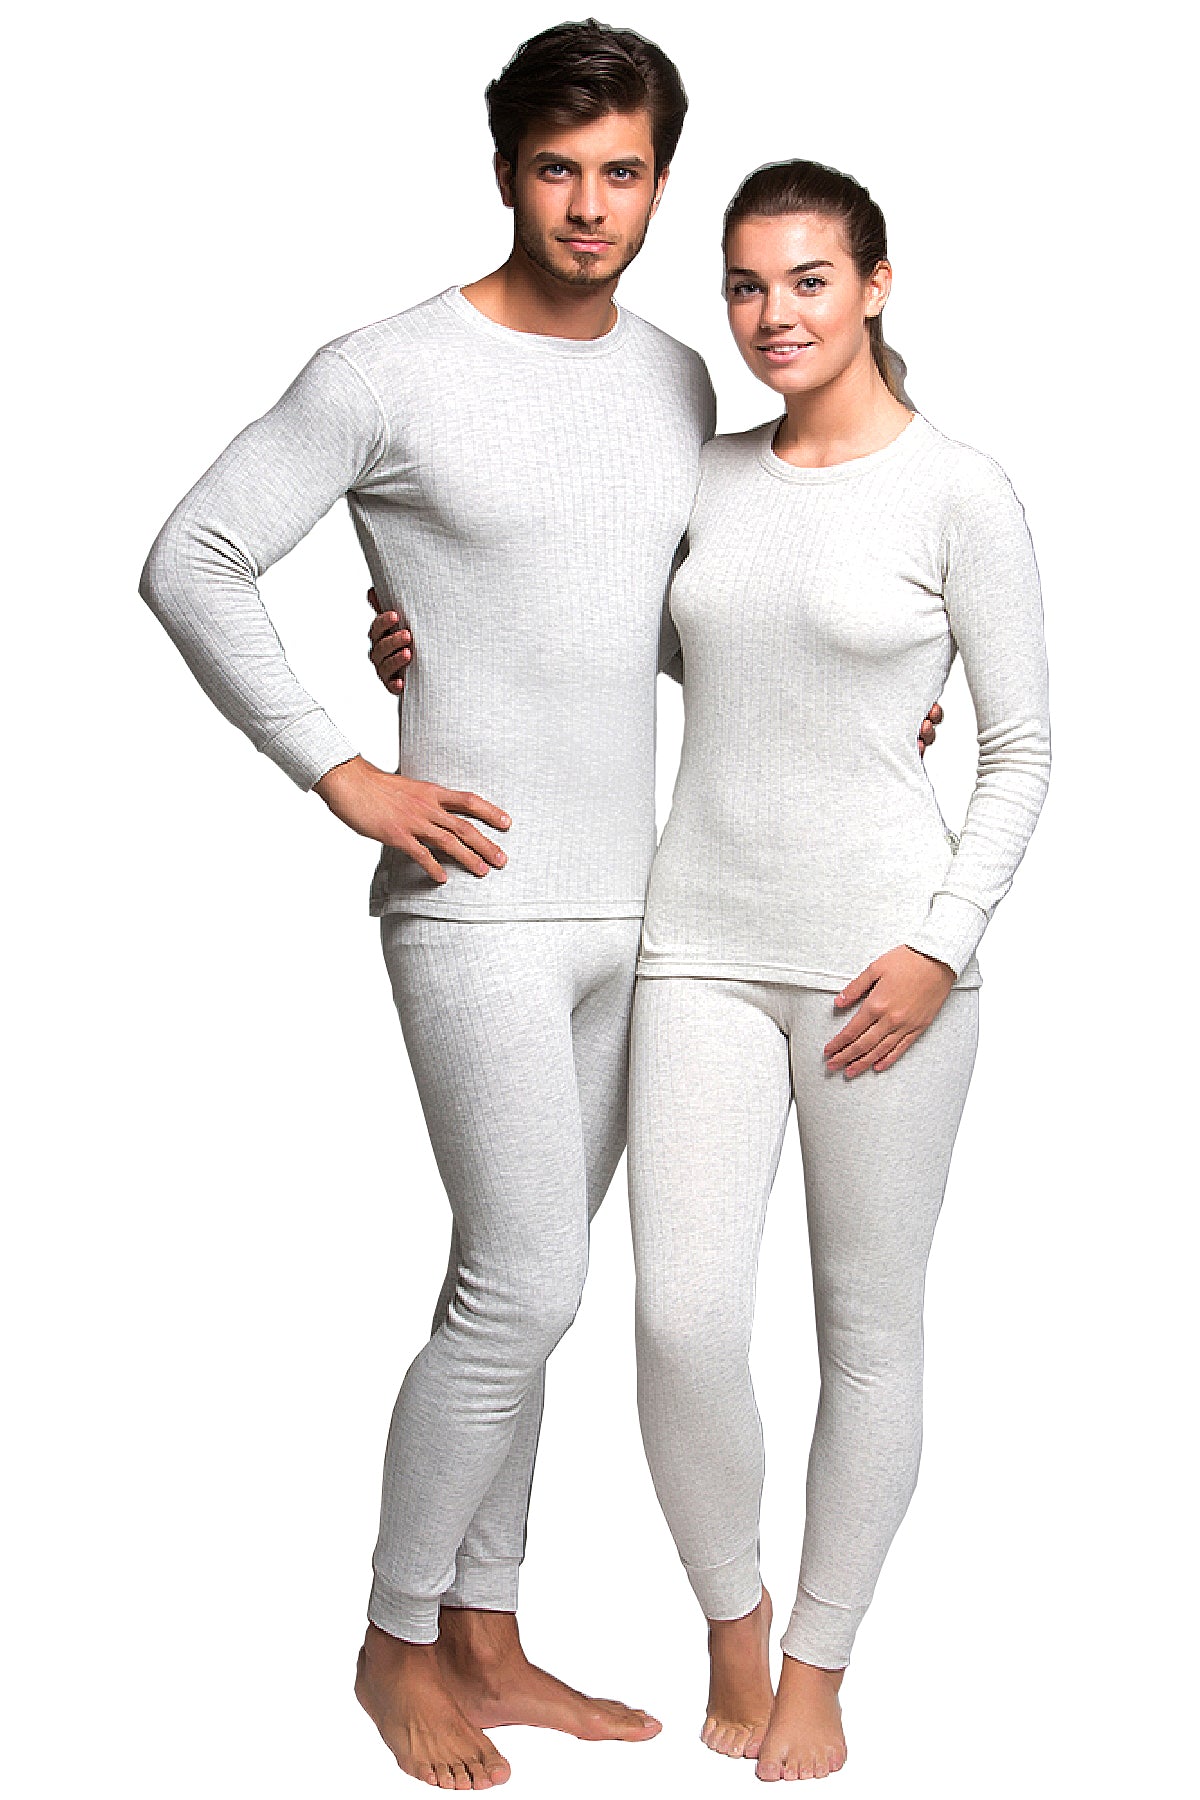 Pliktea White Thermal Underwear Women Self Heating Long Johns Men's Hot  Suit Winter Thermo Pajamas Cothes Men Thermal Underwear - AliExpress